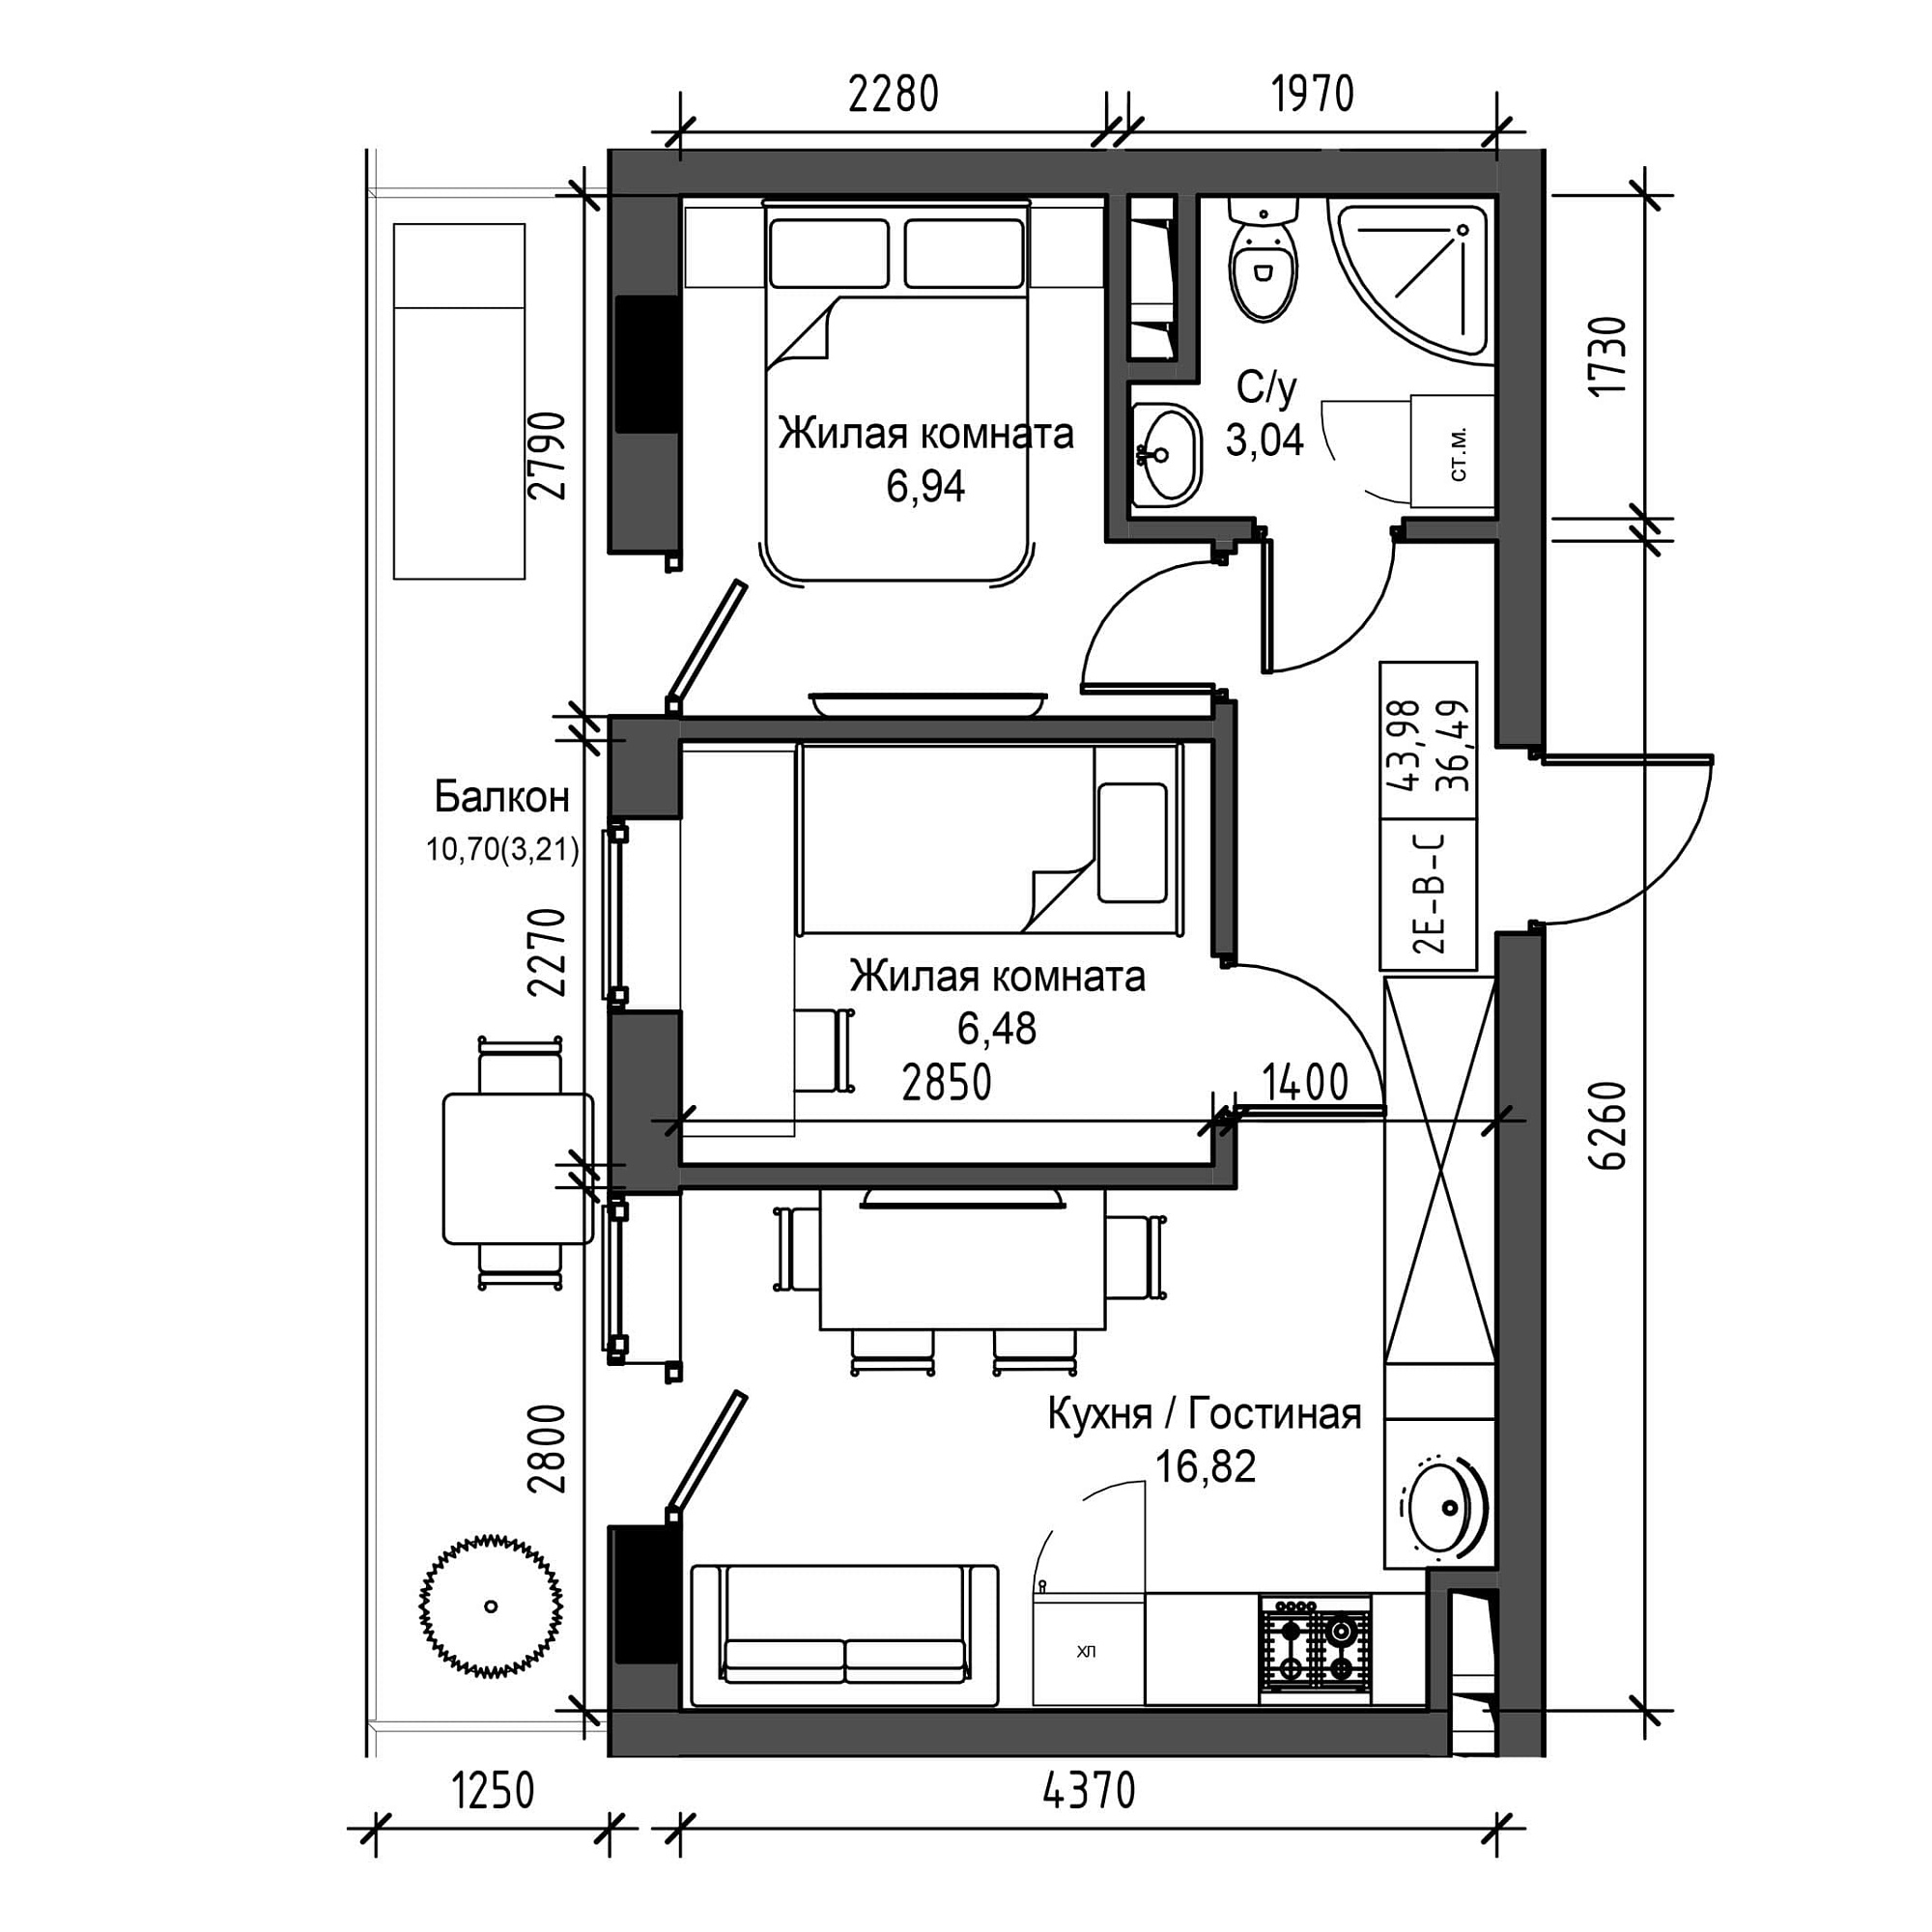 Planning 2-rm flats area 36.49m2, UM-001-08/0017.